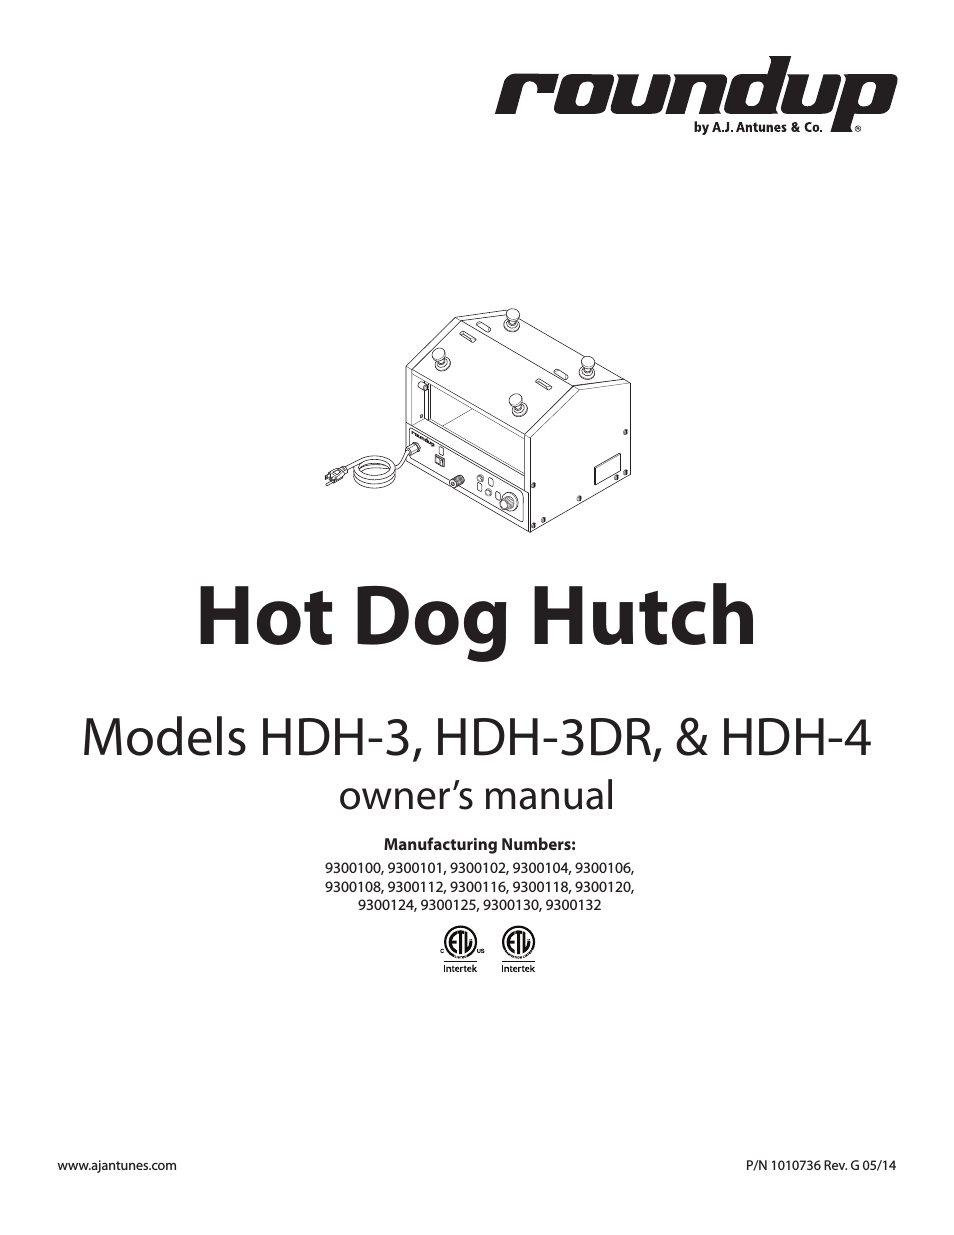 HDH-3DR 9300112